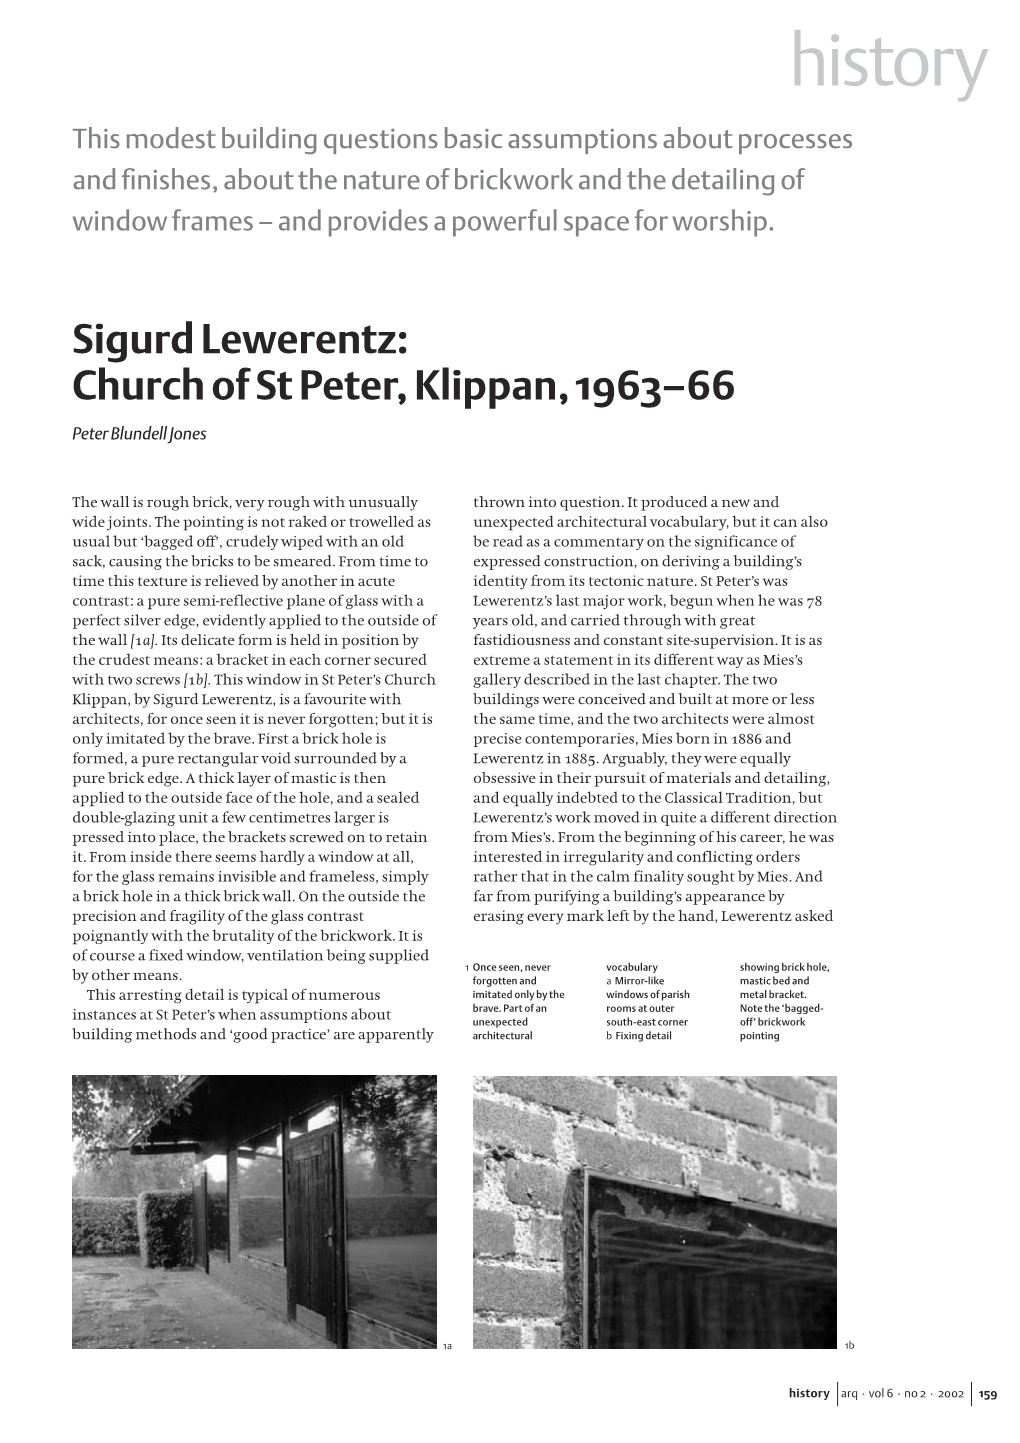 Sigurd Lewerentz: Church of St Peter, Klippan, 1963–66